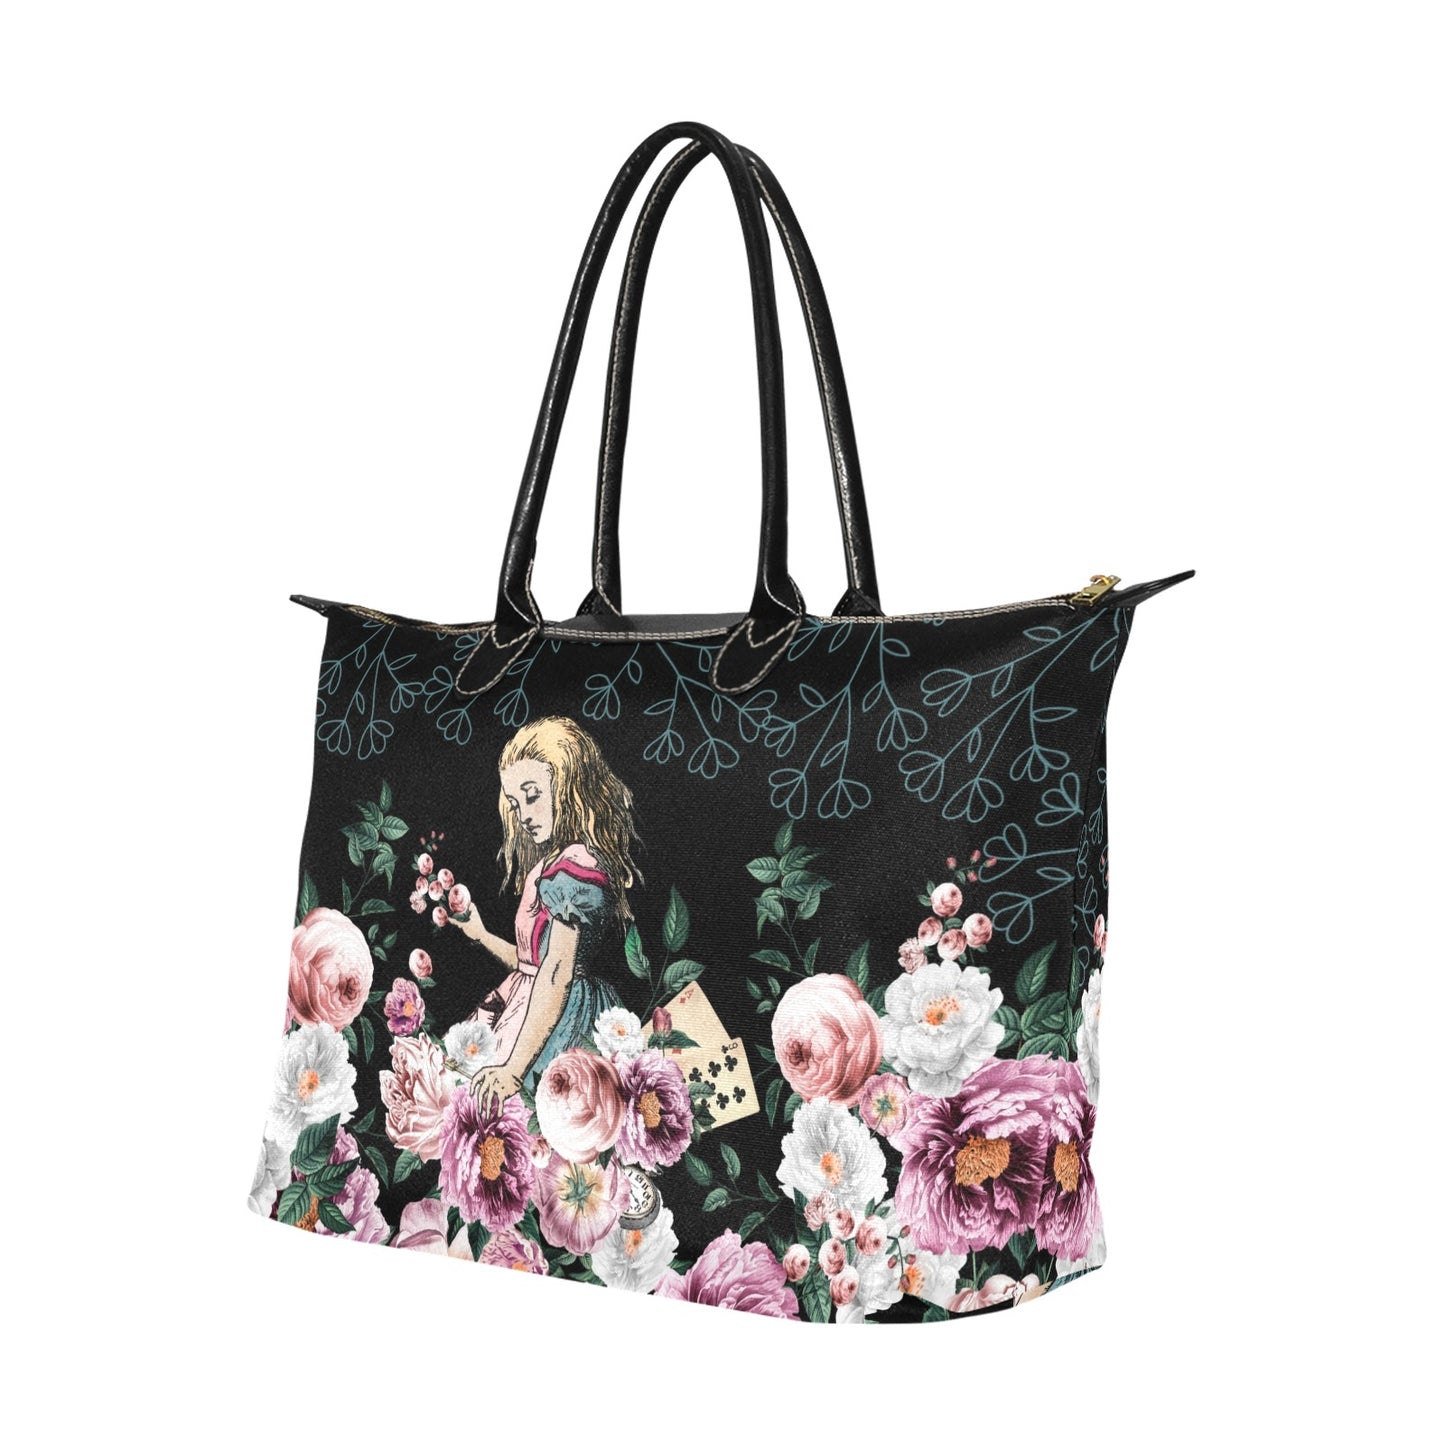 Alice in Wonderland Bag, Classic 15 Inch Handbag, Pink Roses